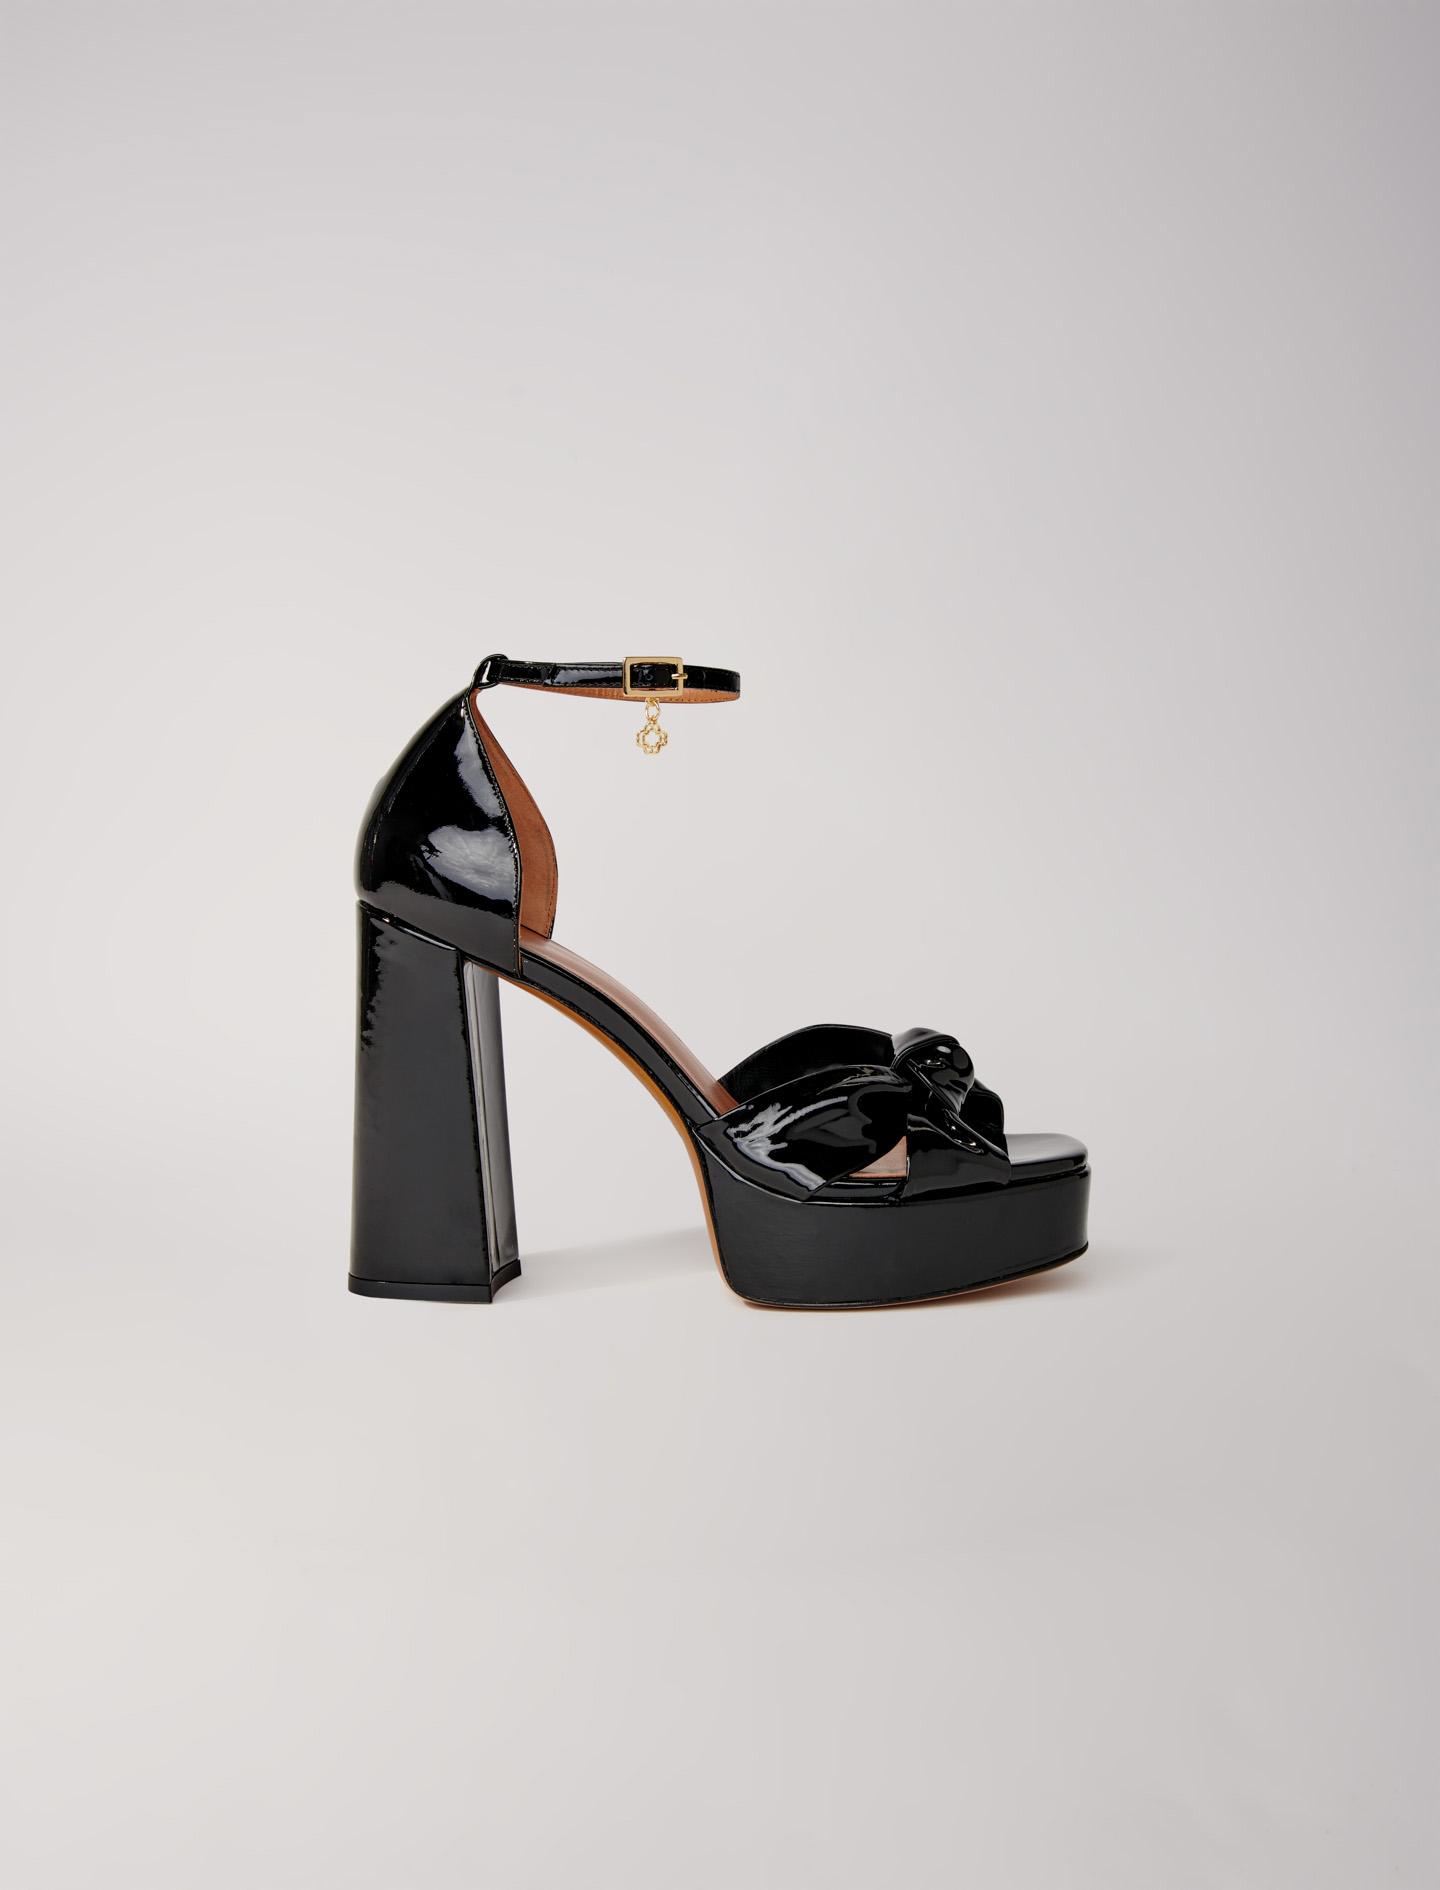 Mixte's goat Outer: Leather platform sandals for Spring/Summer, size Mixte-All Shoes-US 9.5 / FR 40, in color Black / Black